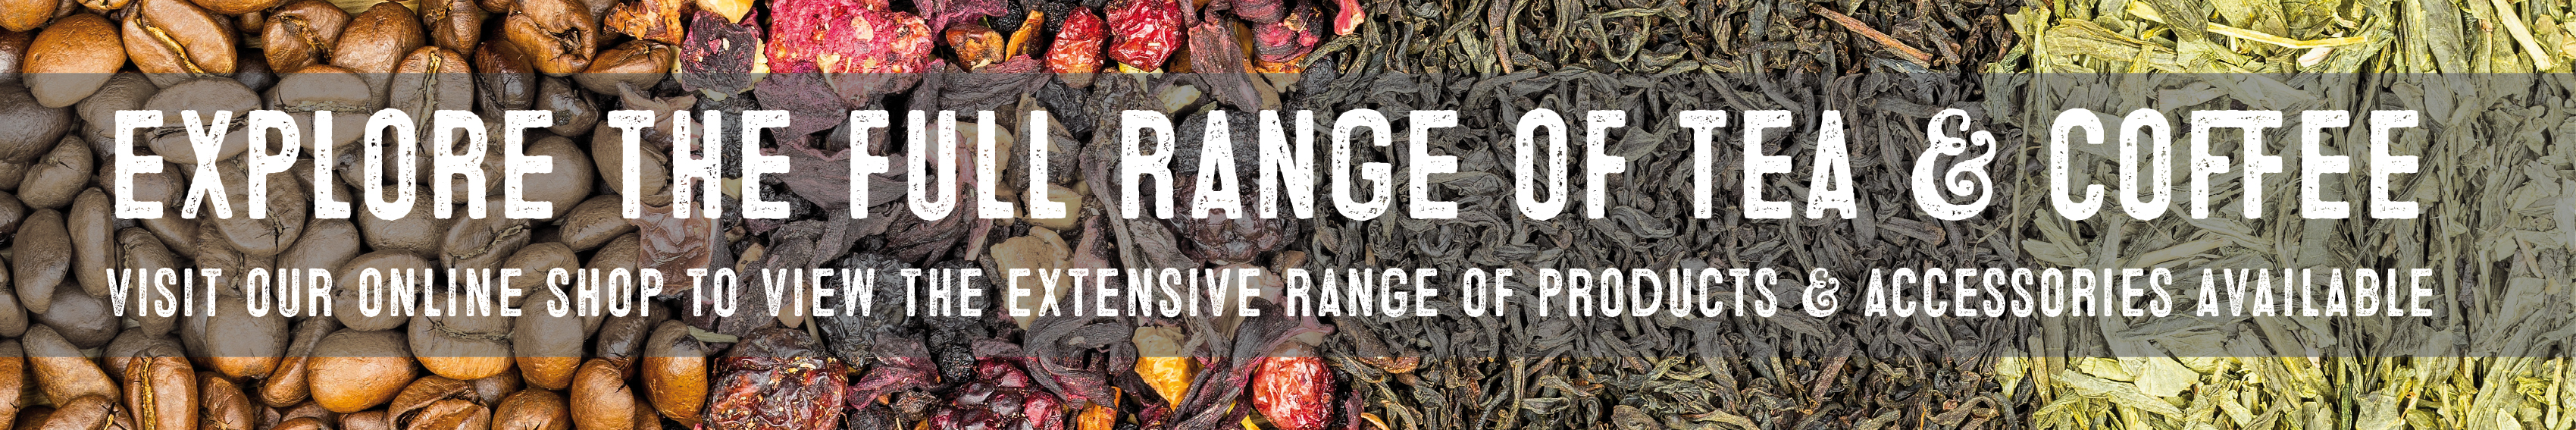 Explore the full range of tea & coffee